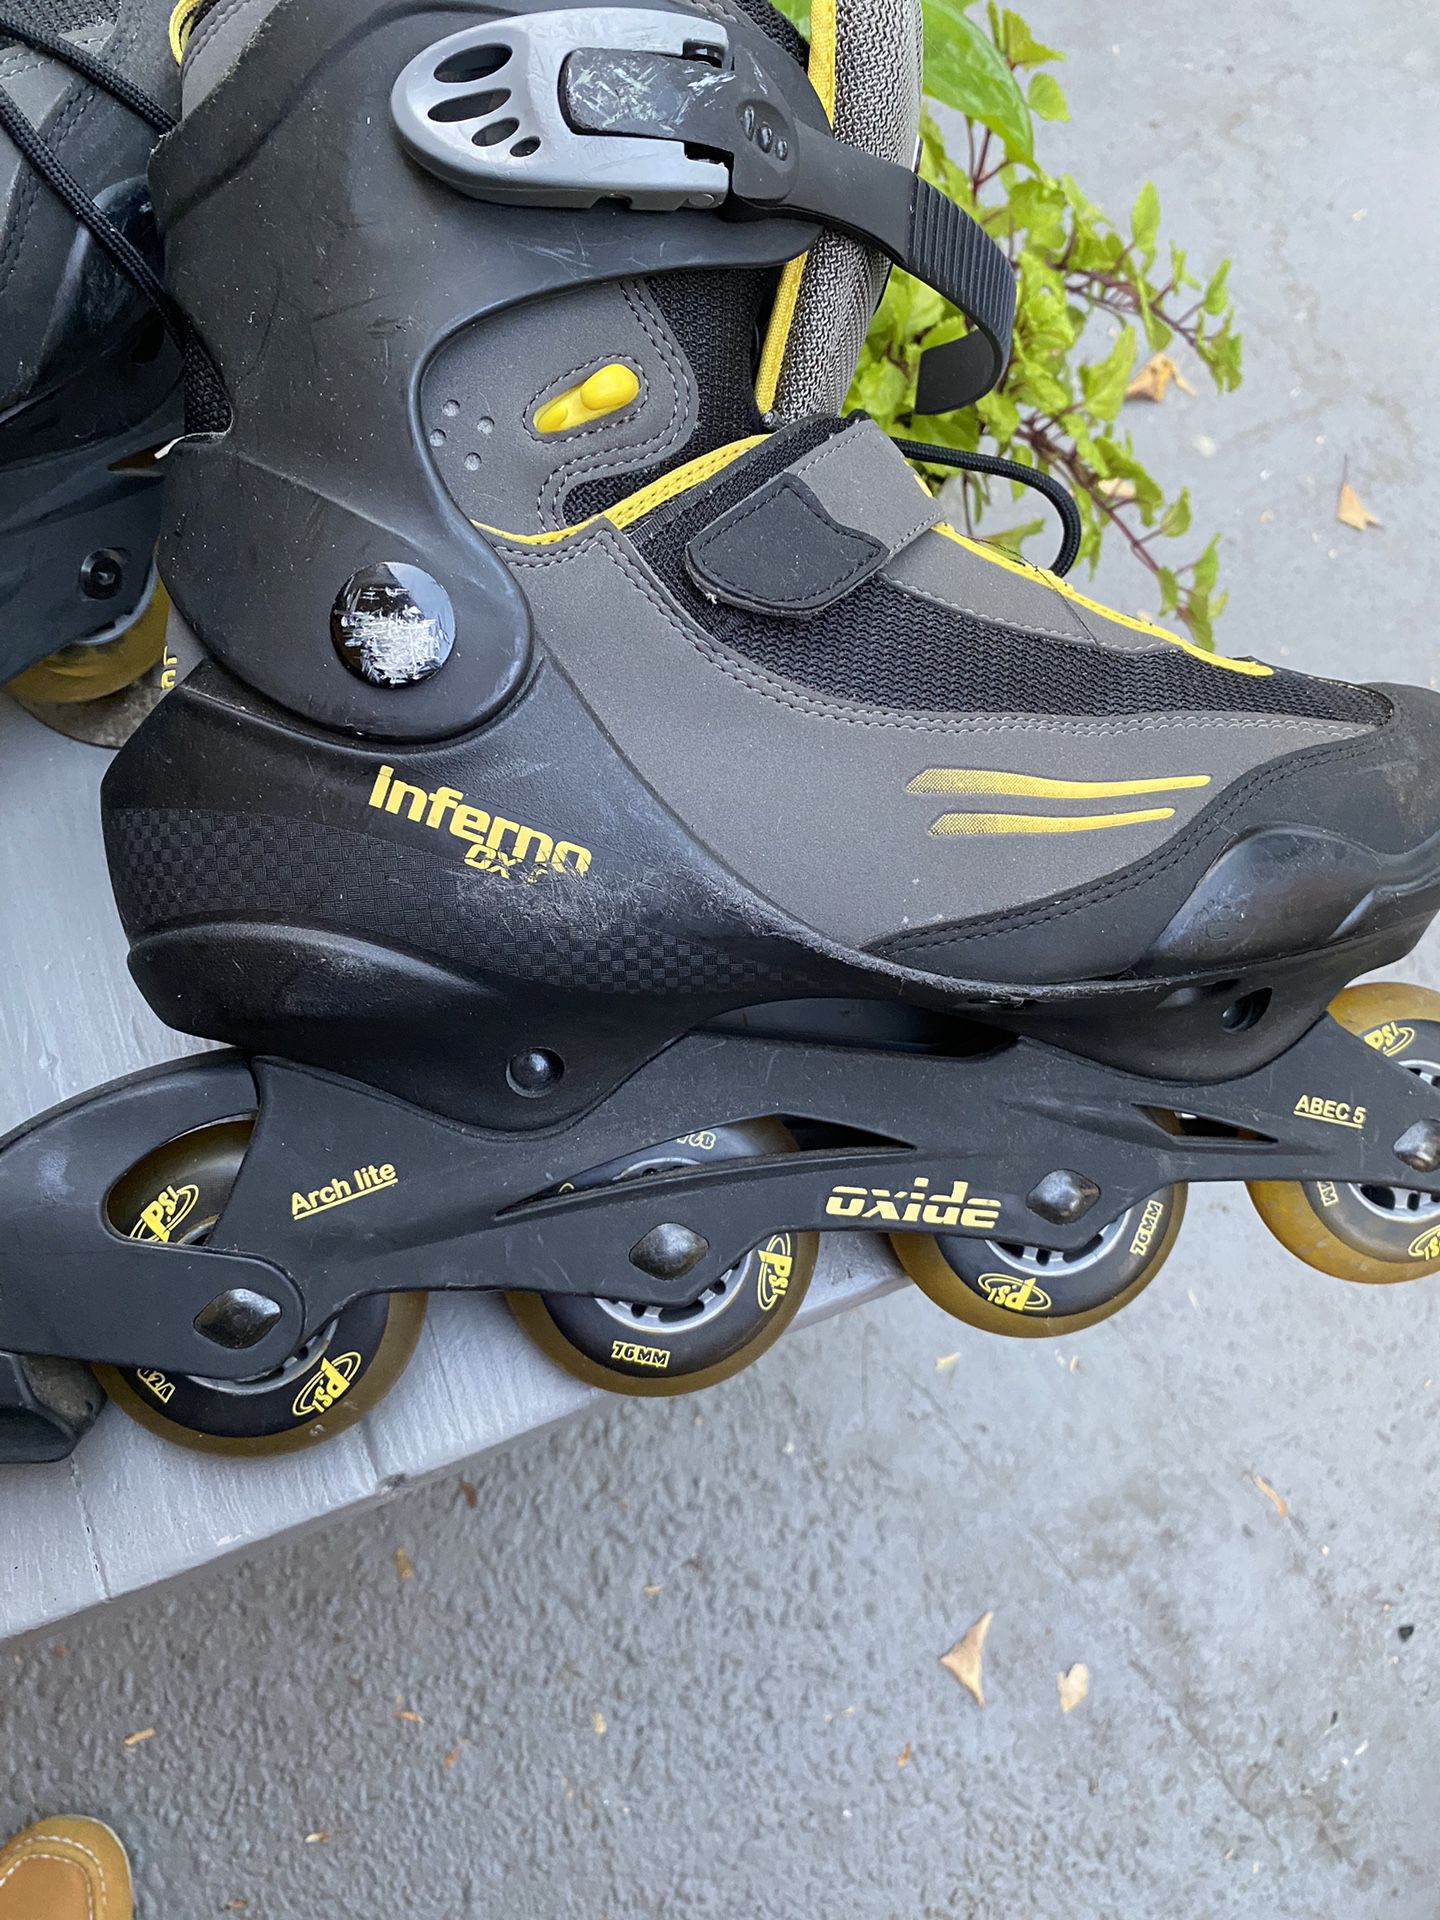 Roller Skates for sale in Oakland, California